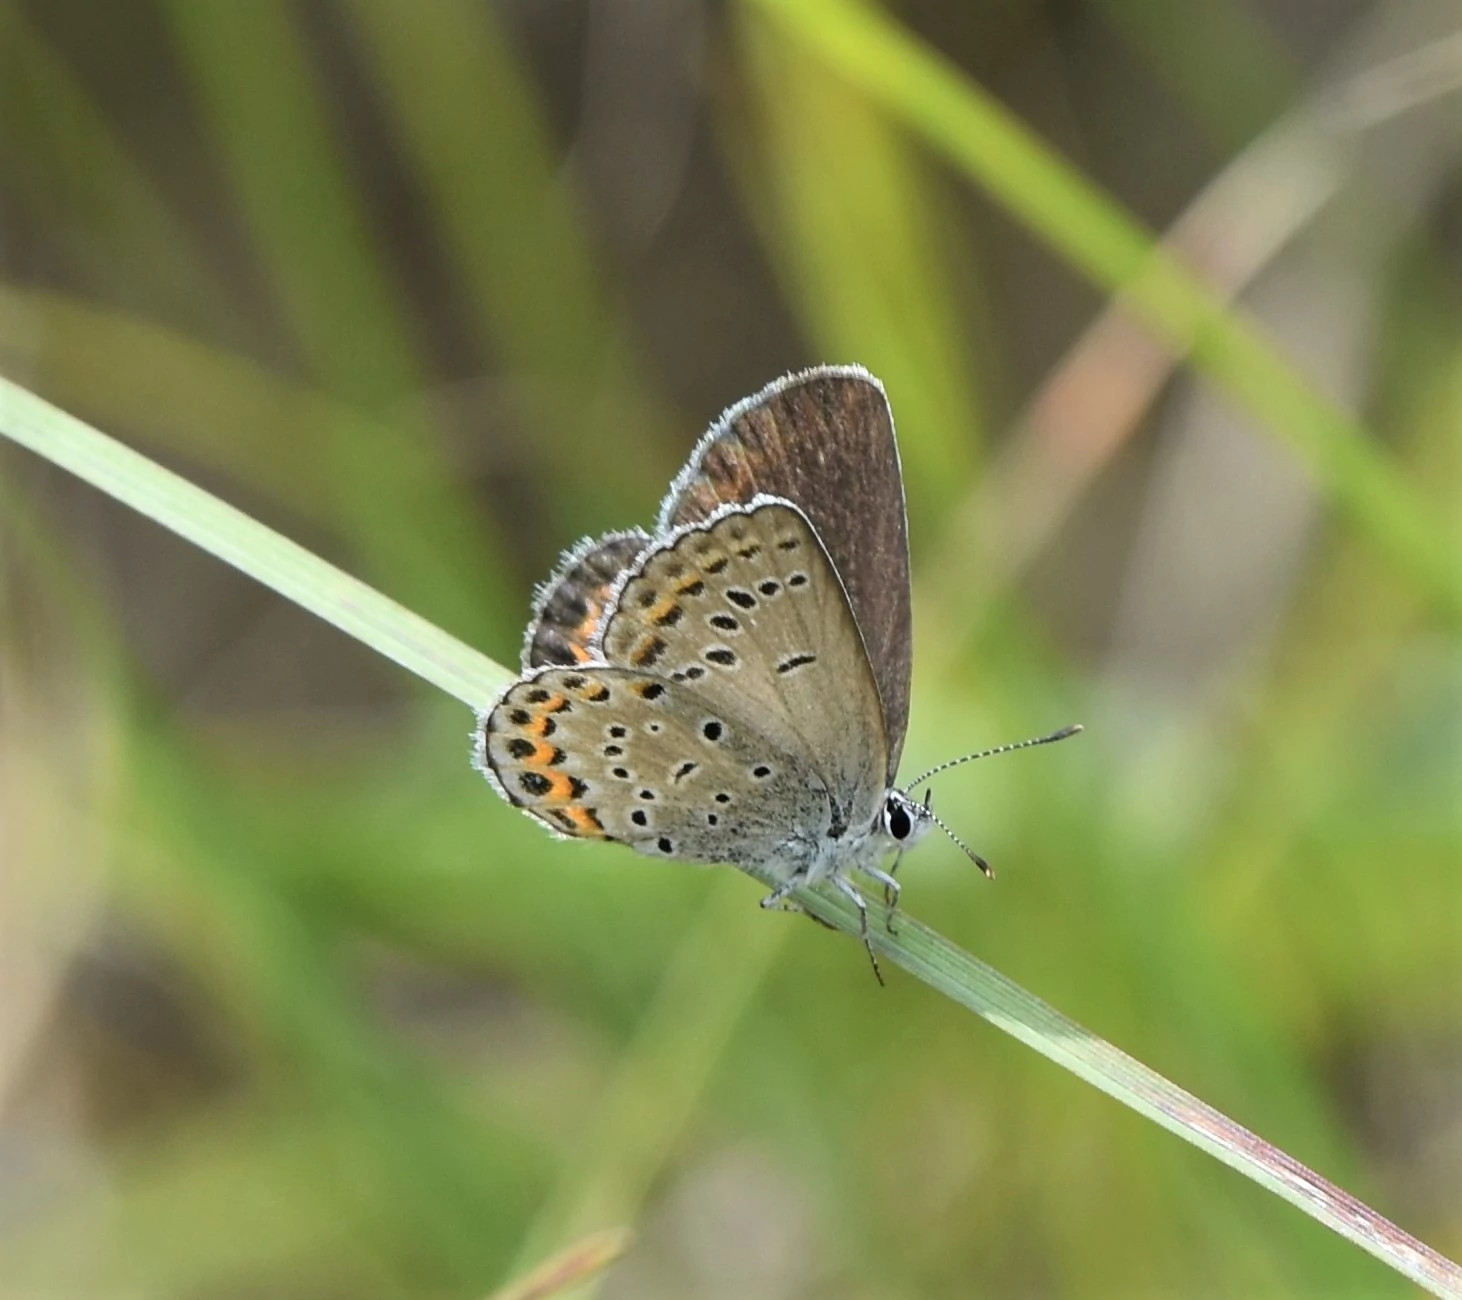 female karner blue butterfly atop a blade of grass